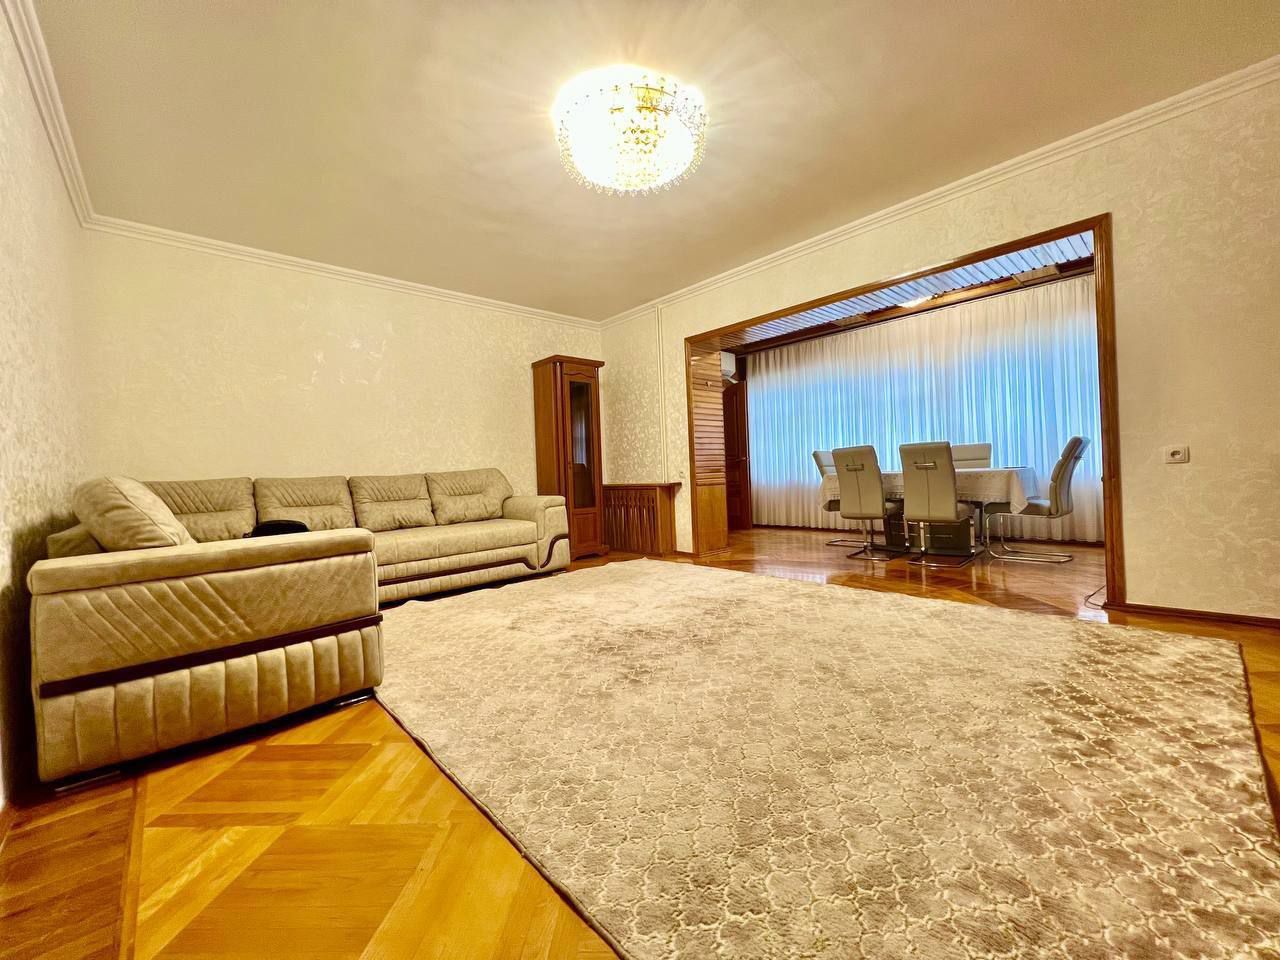 Продается квартира в центре район Дархан  Спец план 4/2/5. 125м²